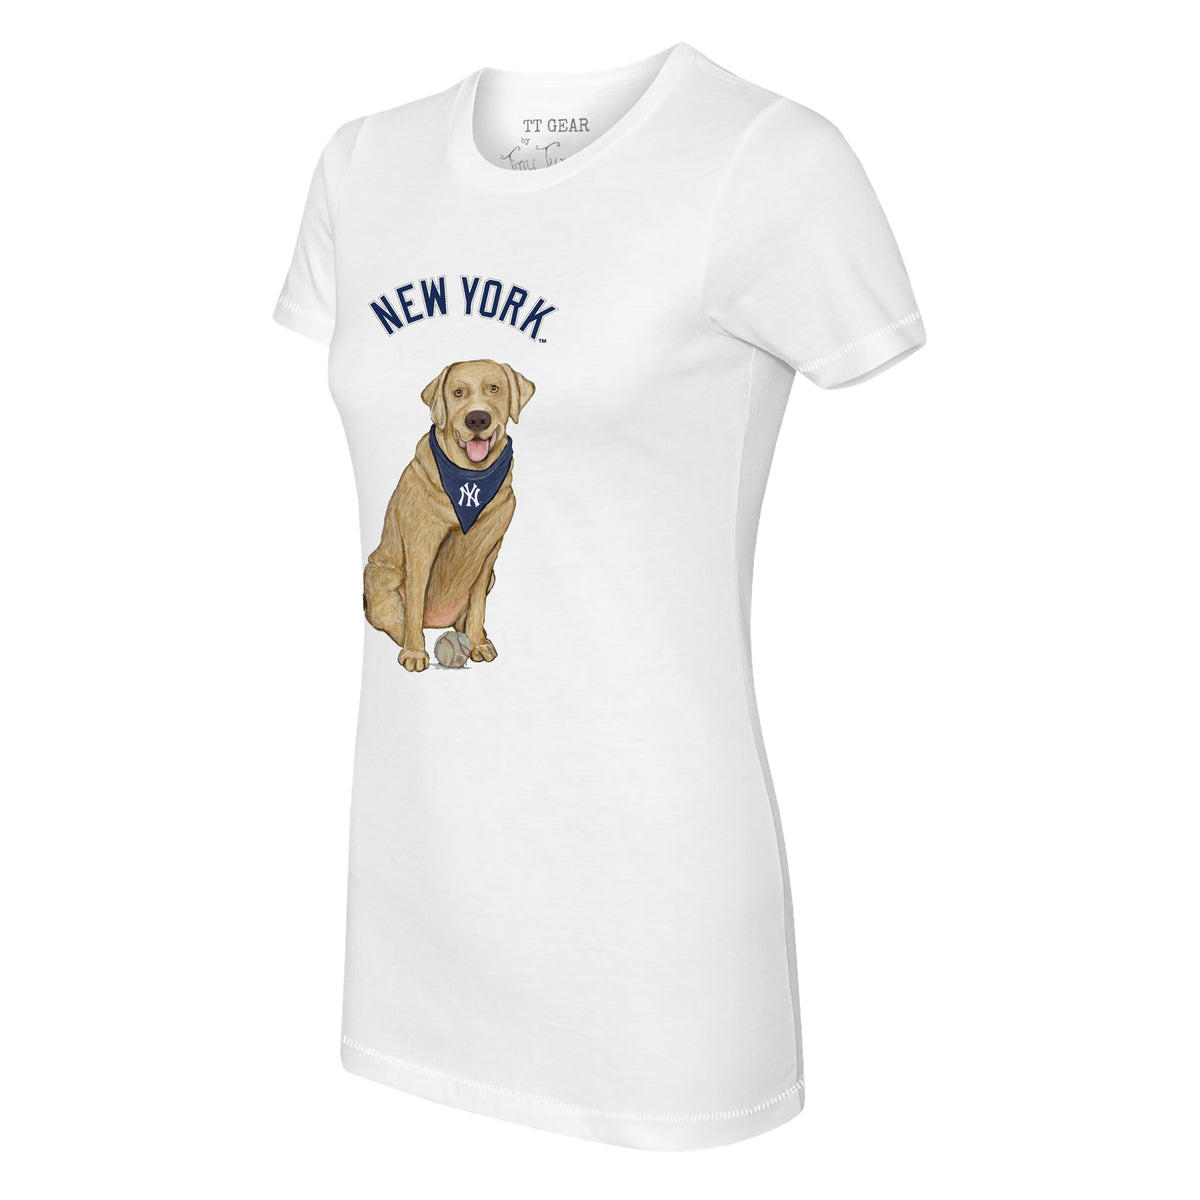 New York Yankees Yellow Labrador Retriever Tee Shirt